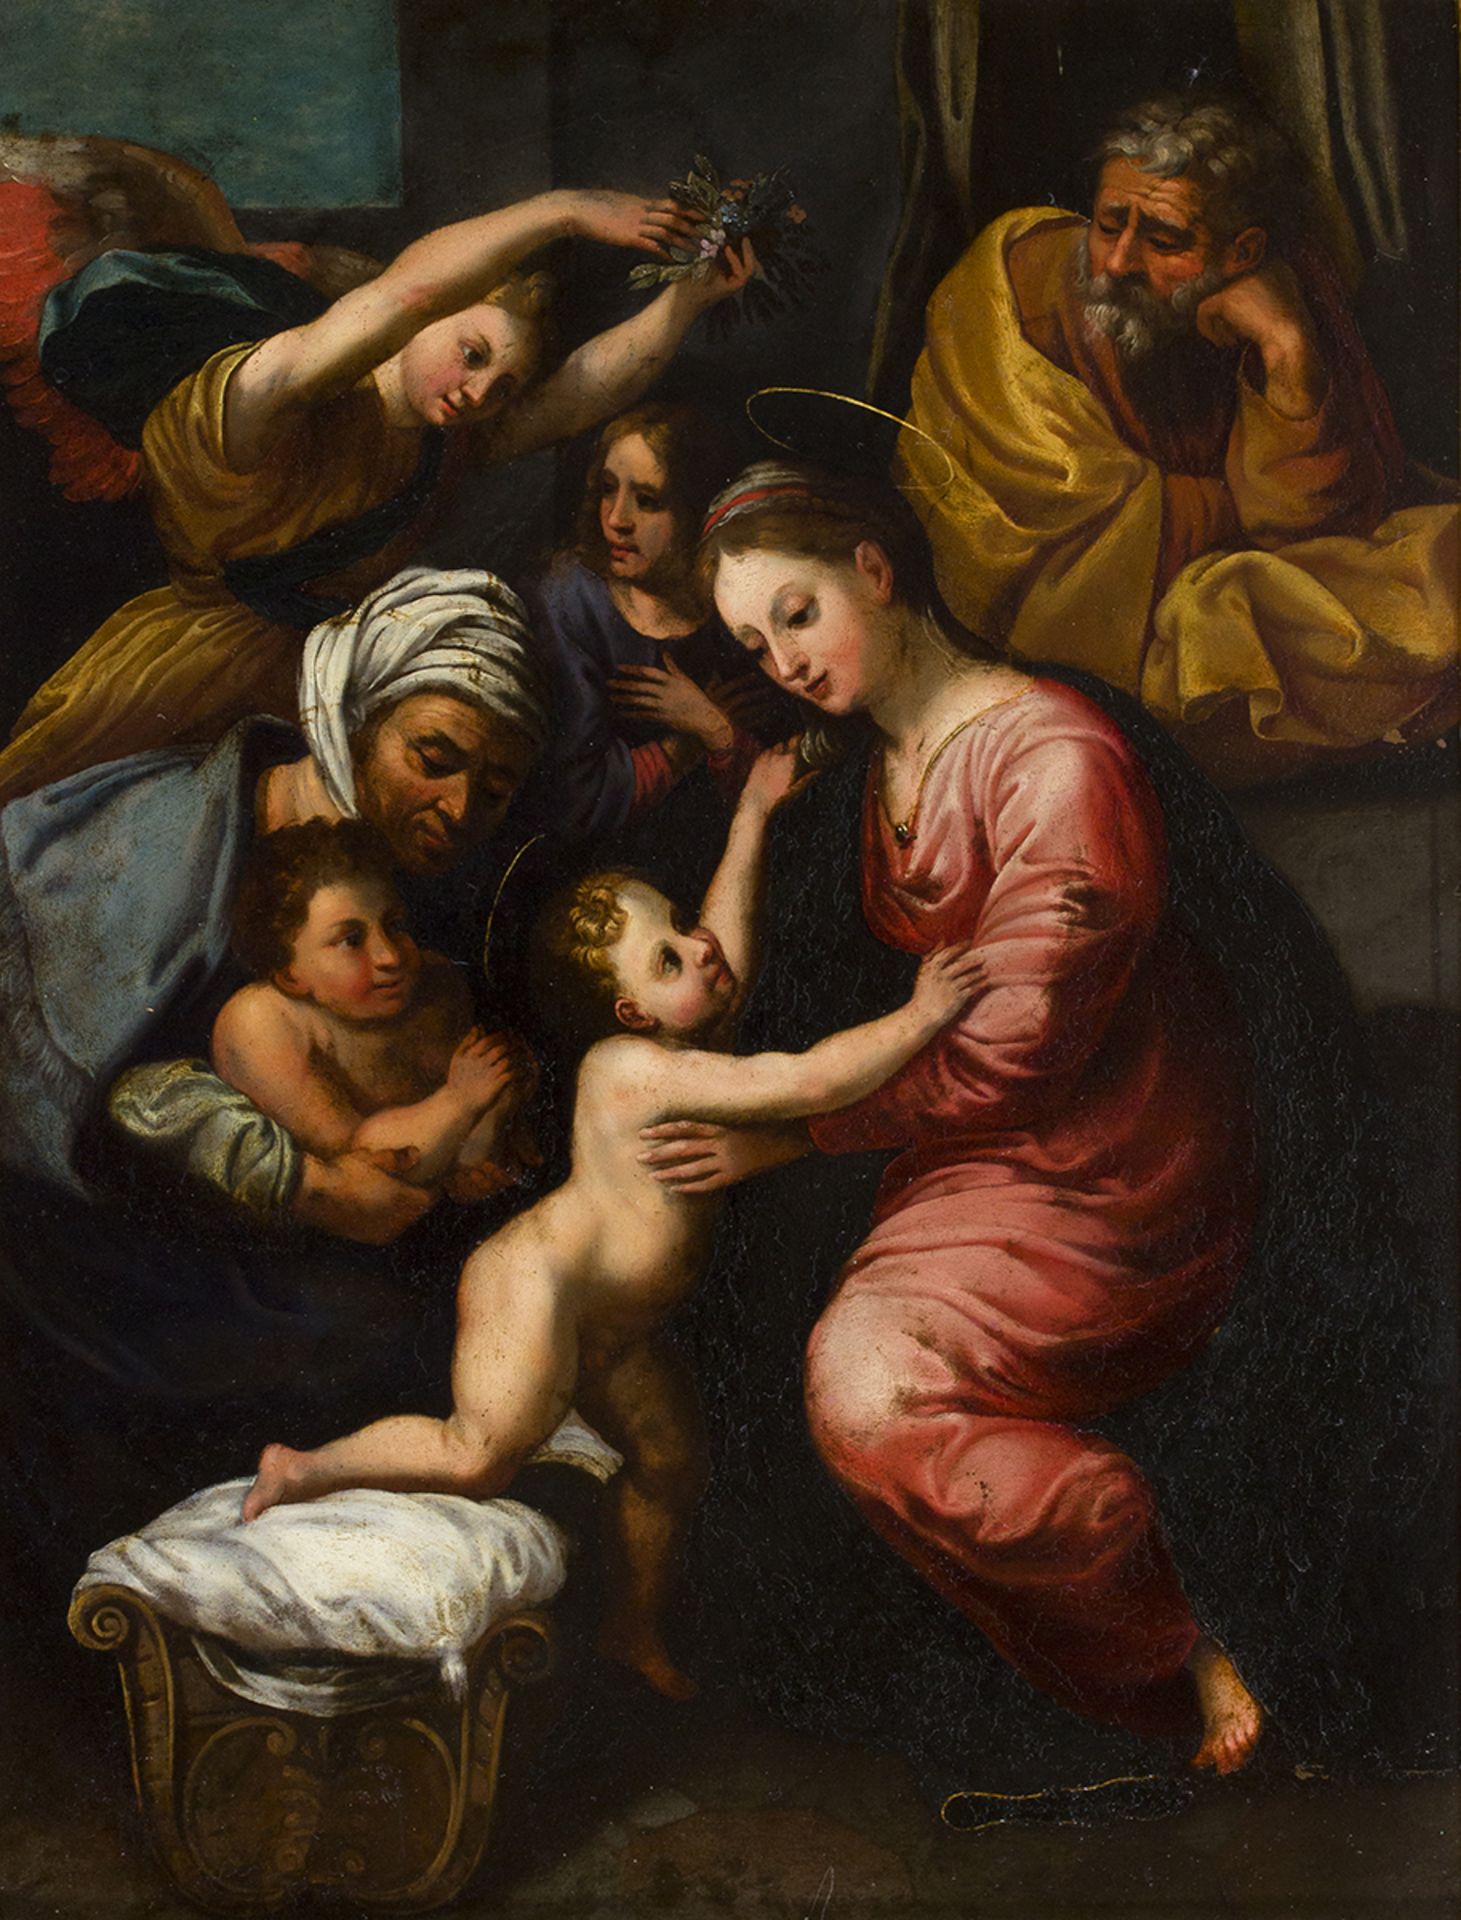 (EMILIAN?) FOLLOWER OF RAFFAELLO SANZIO, 16th CENTURY - - Holy Family with Saint [...]